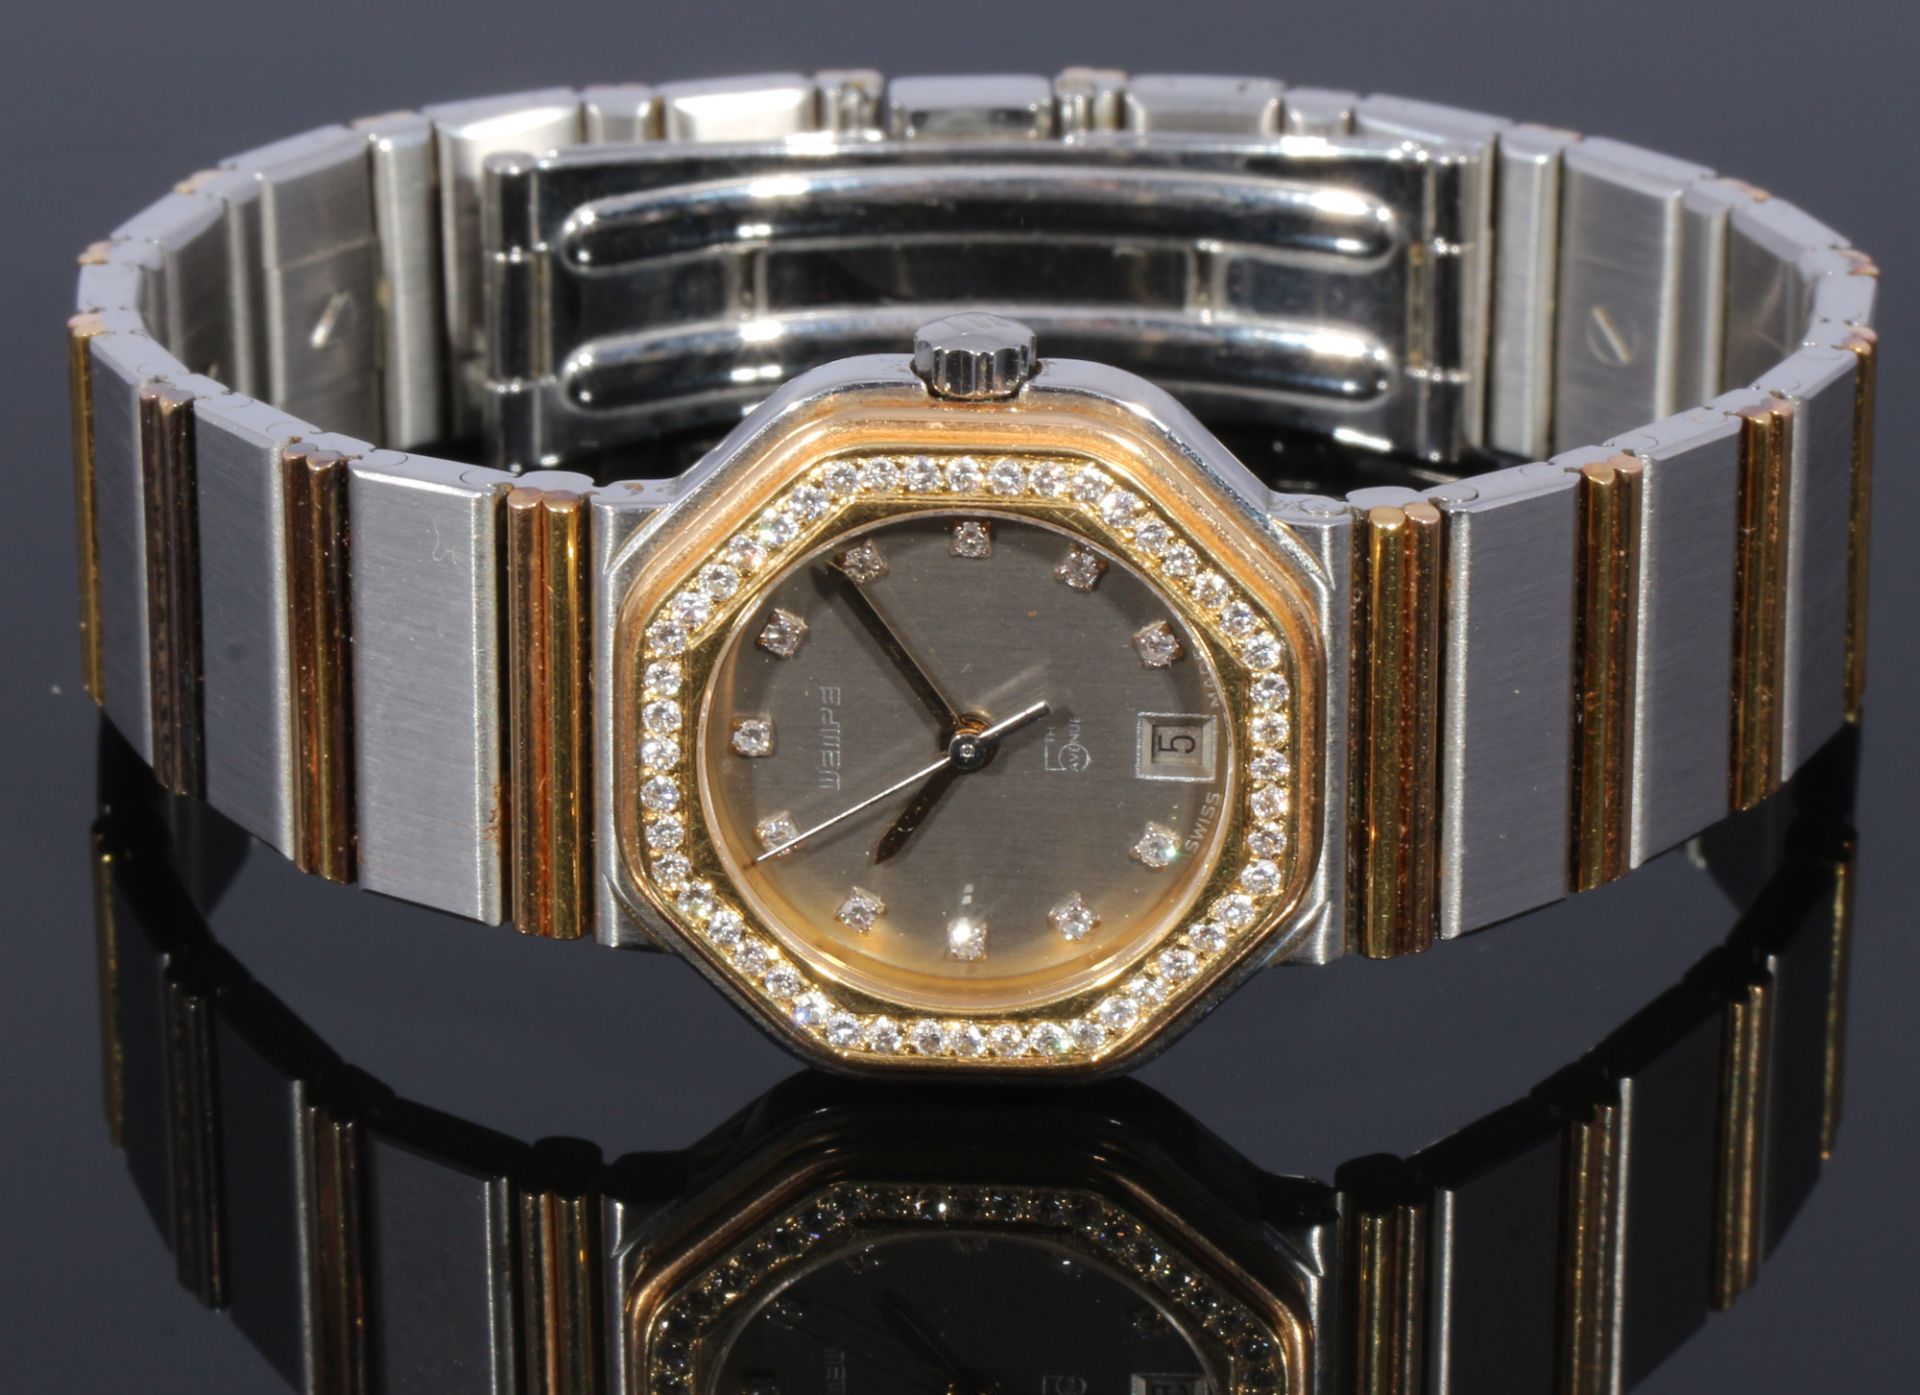 Wempe 5th Avenue Damen Armbanduhr mit Brillanten, ladies wrist watch with diamonds, - Image 3 of 5